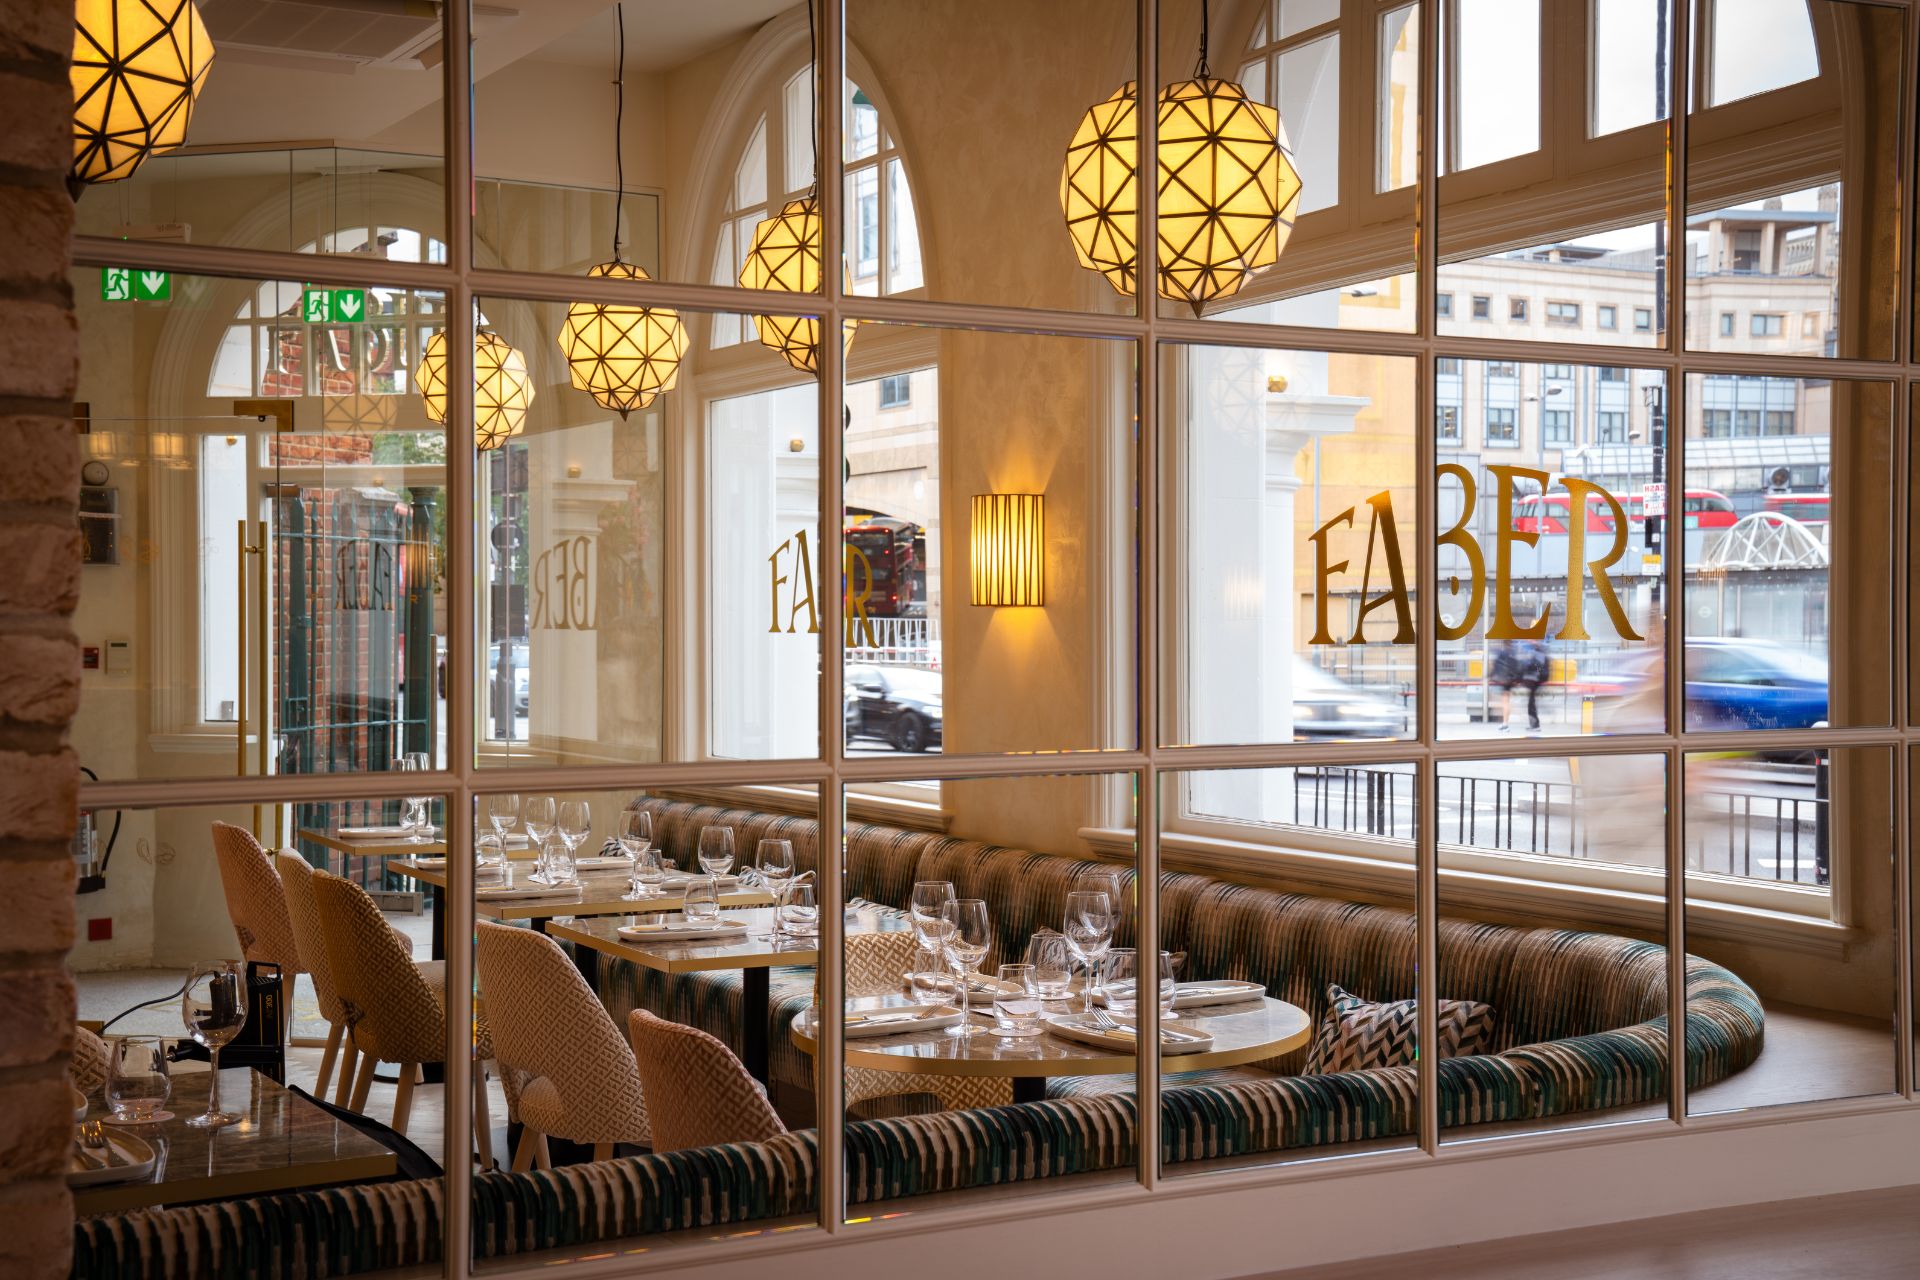 Inside Faber, Hammersmith's Brand New Fish Restaurant